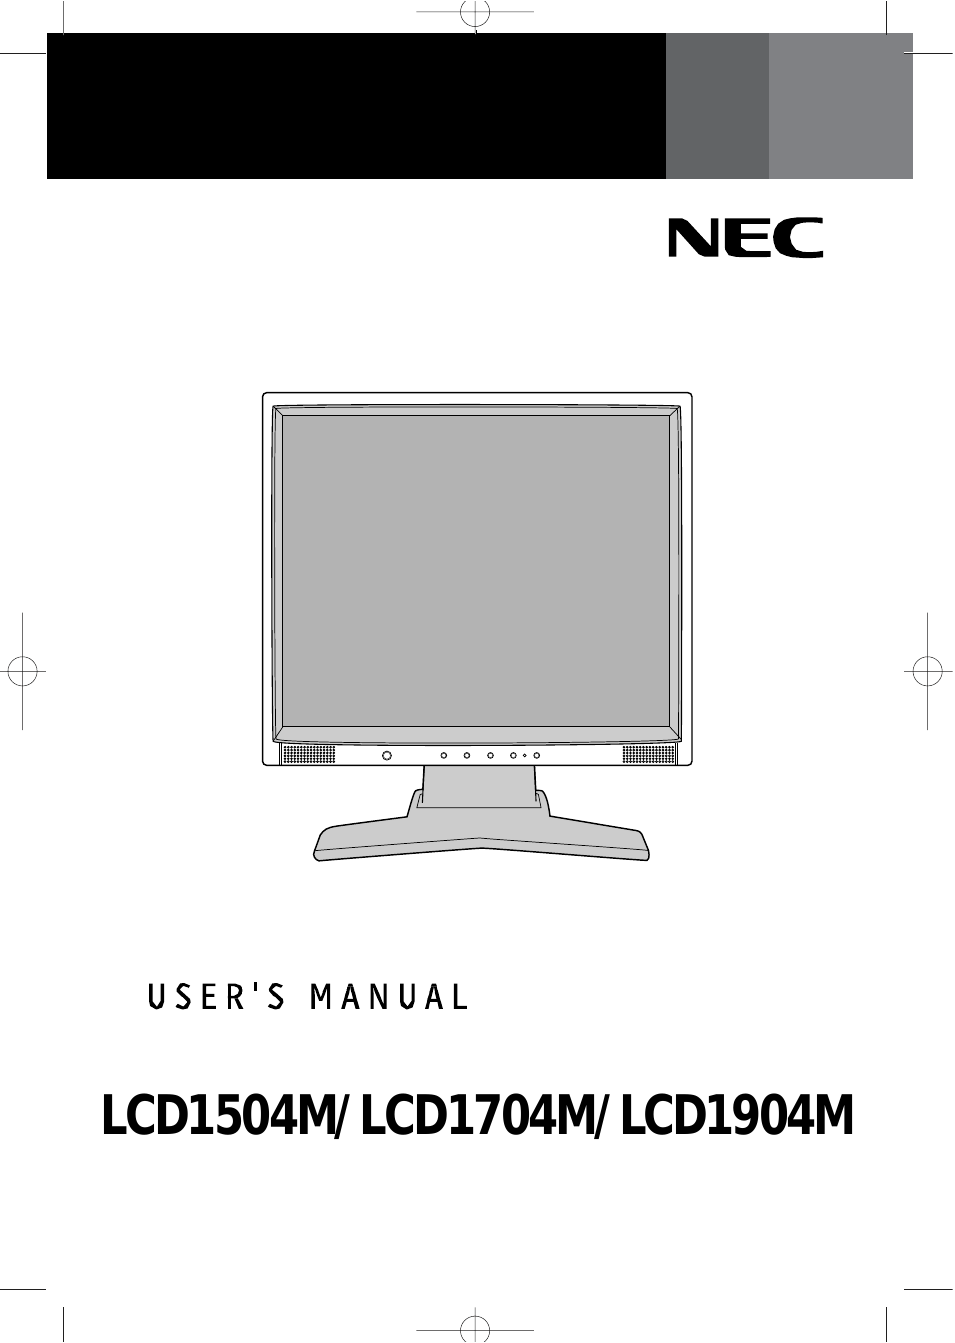 LCD1704M